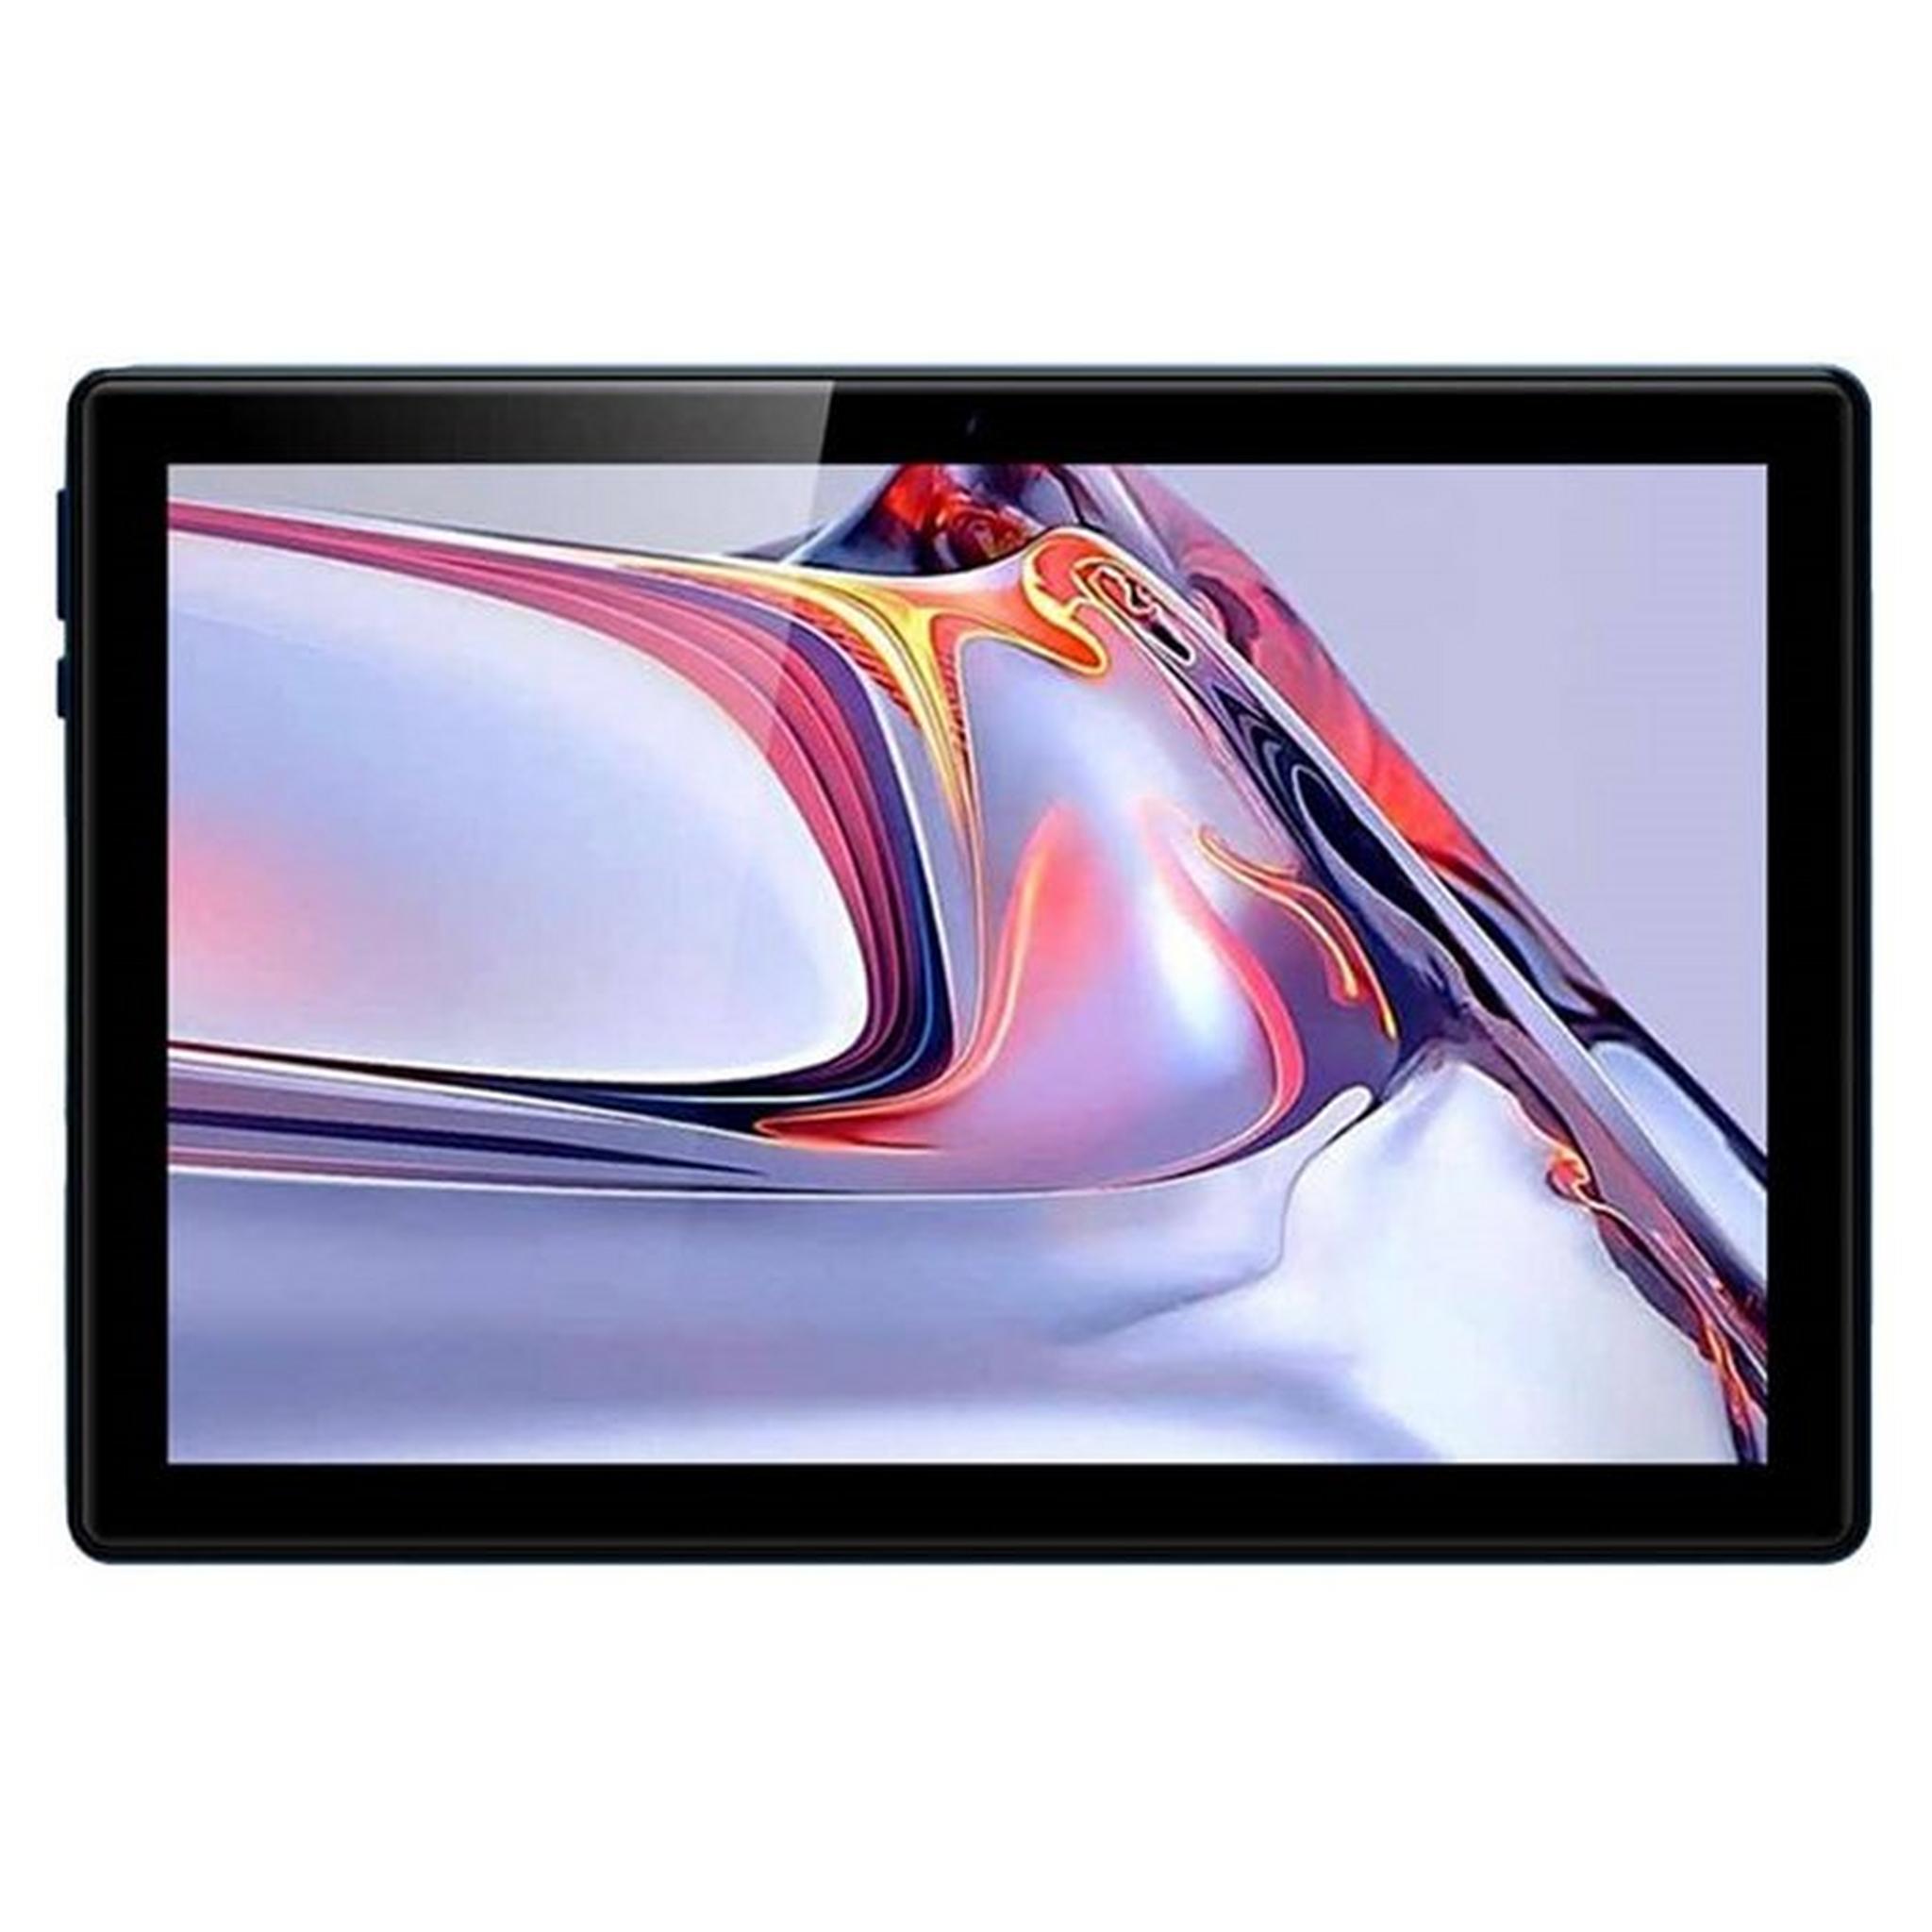 G-Tab Lazor Infinity 4G LTE Tablet, 2GB RAM, 32GB, 10.1-inch, T10101 – Grey